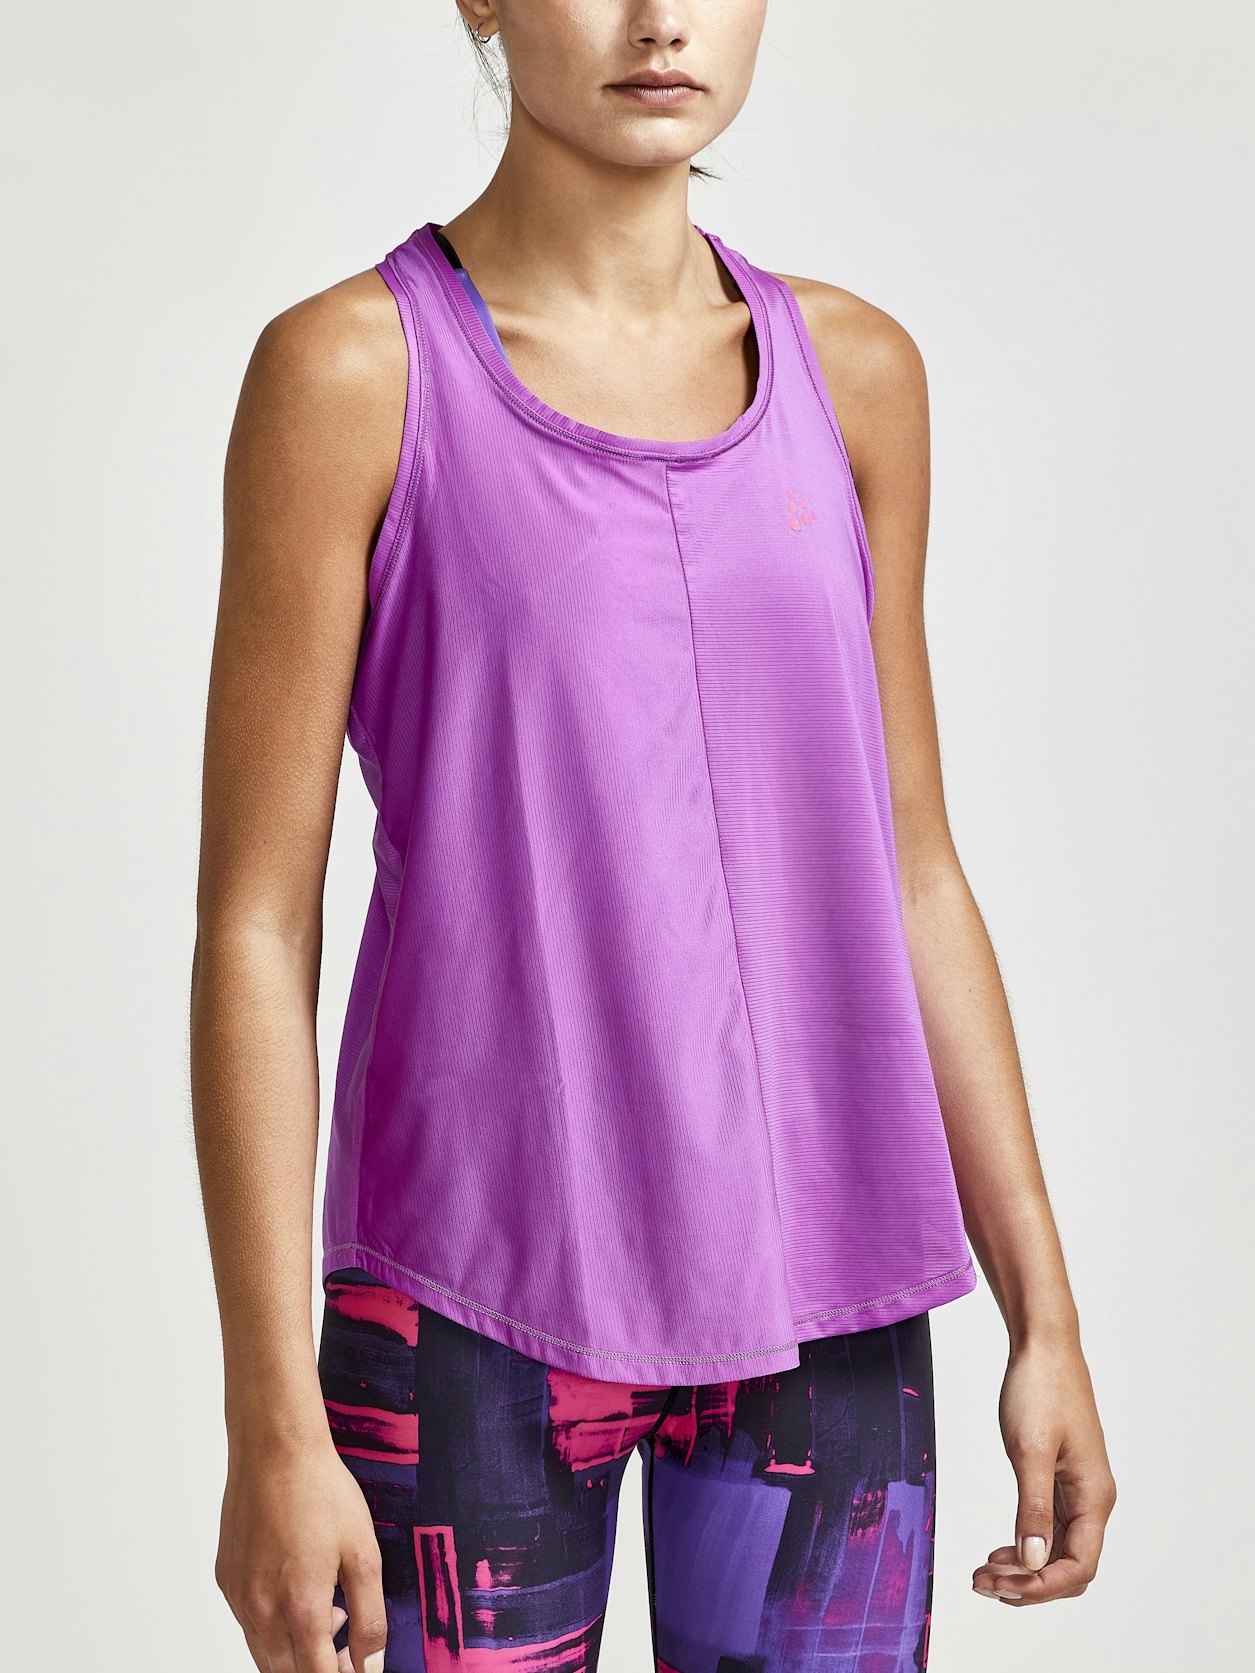 Tangerine Activewear Sleeveless Purple & Pink Tank Top Muscle